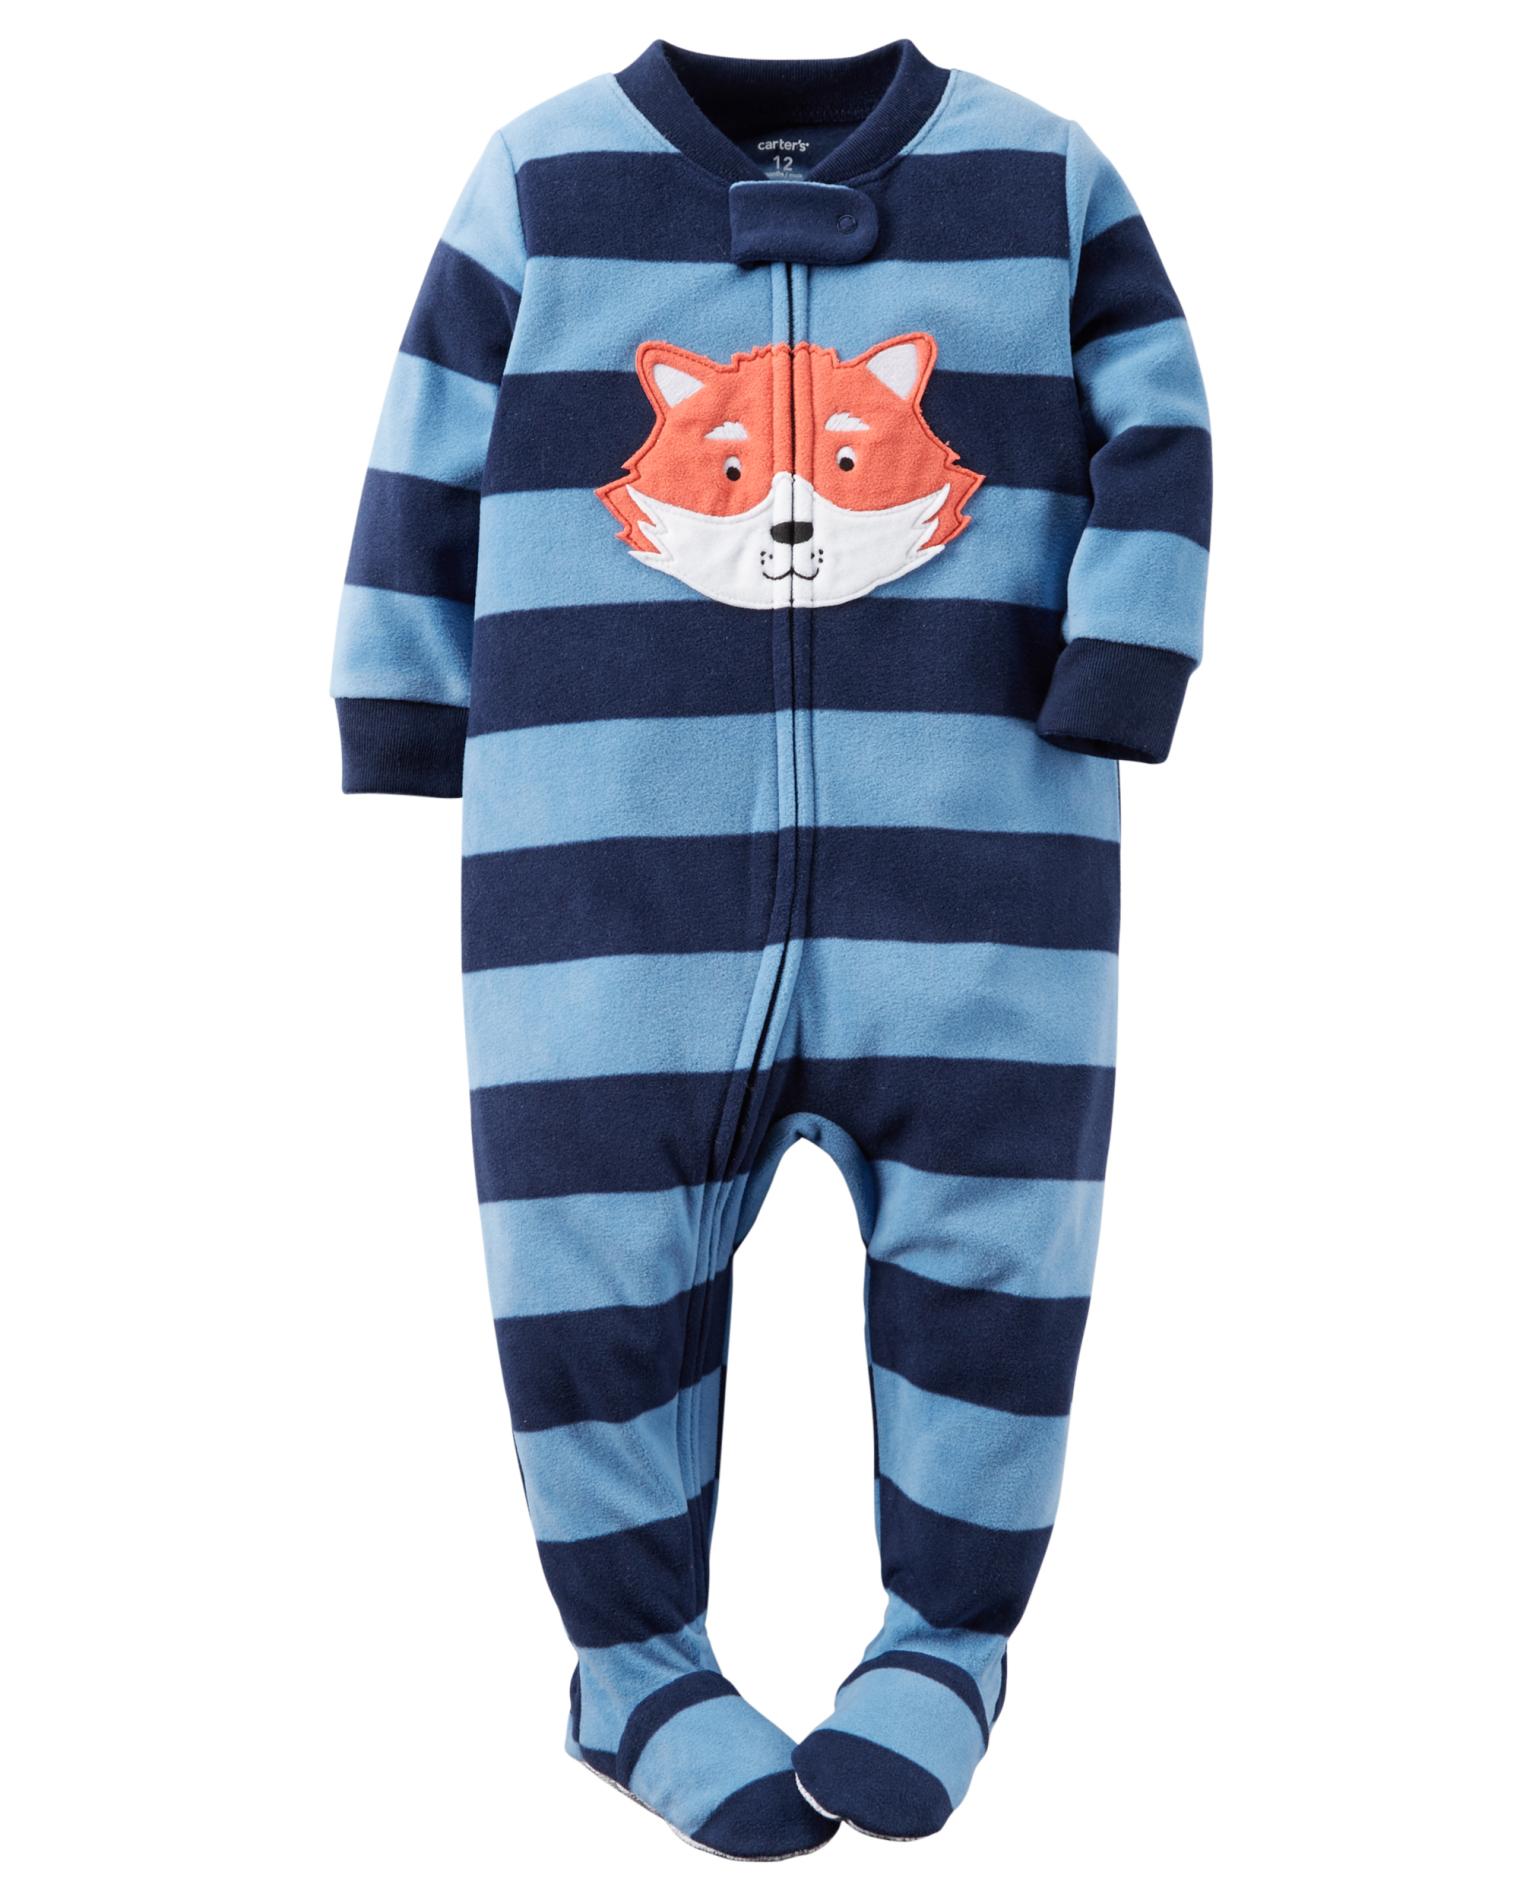 Carter's Infant & Toddler Boys' Fleece Sleeper Pajamas - Fox